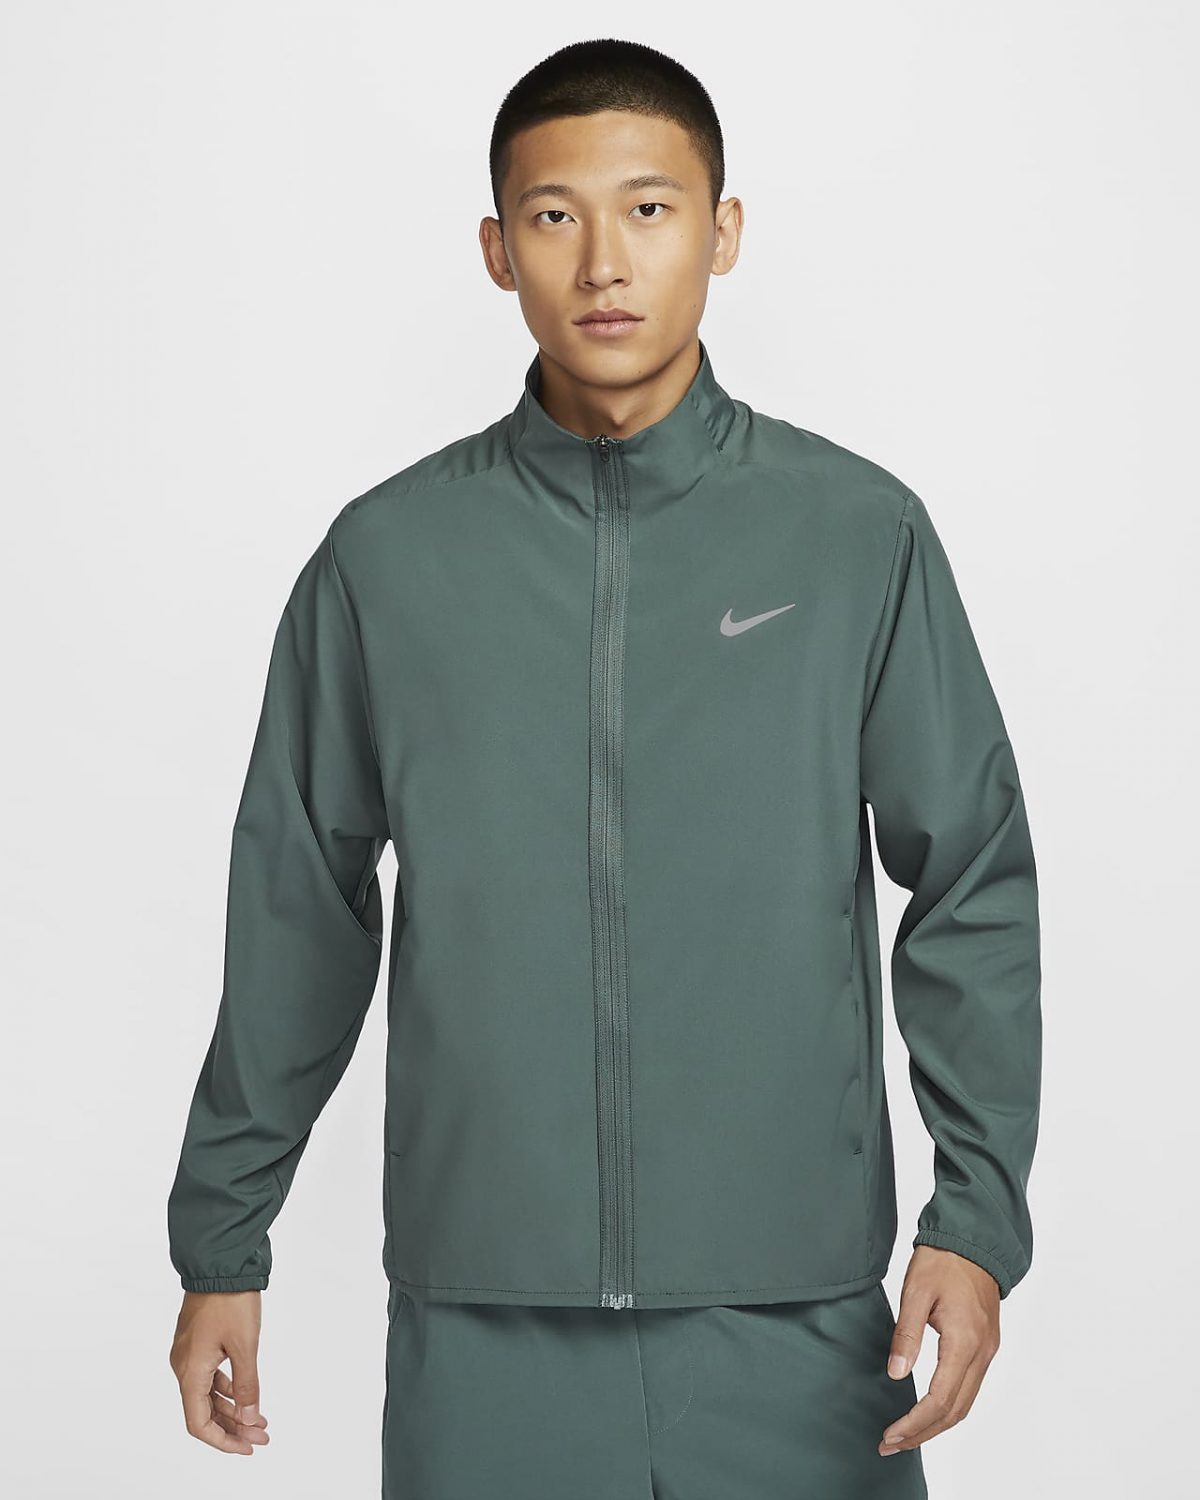 Мужская куртка Nike Form фото